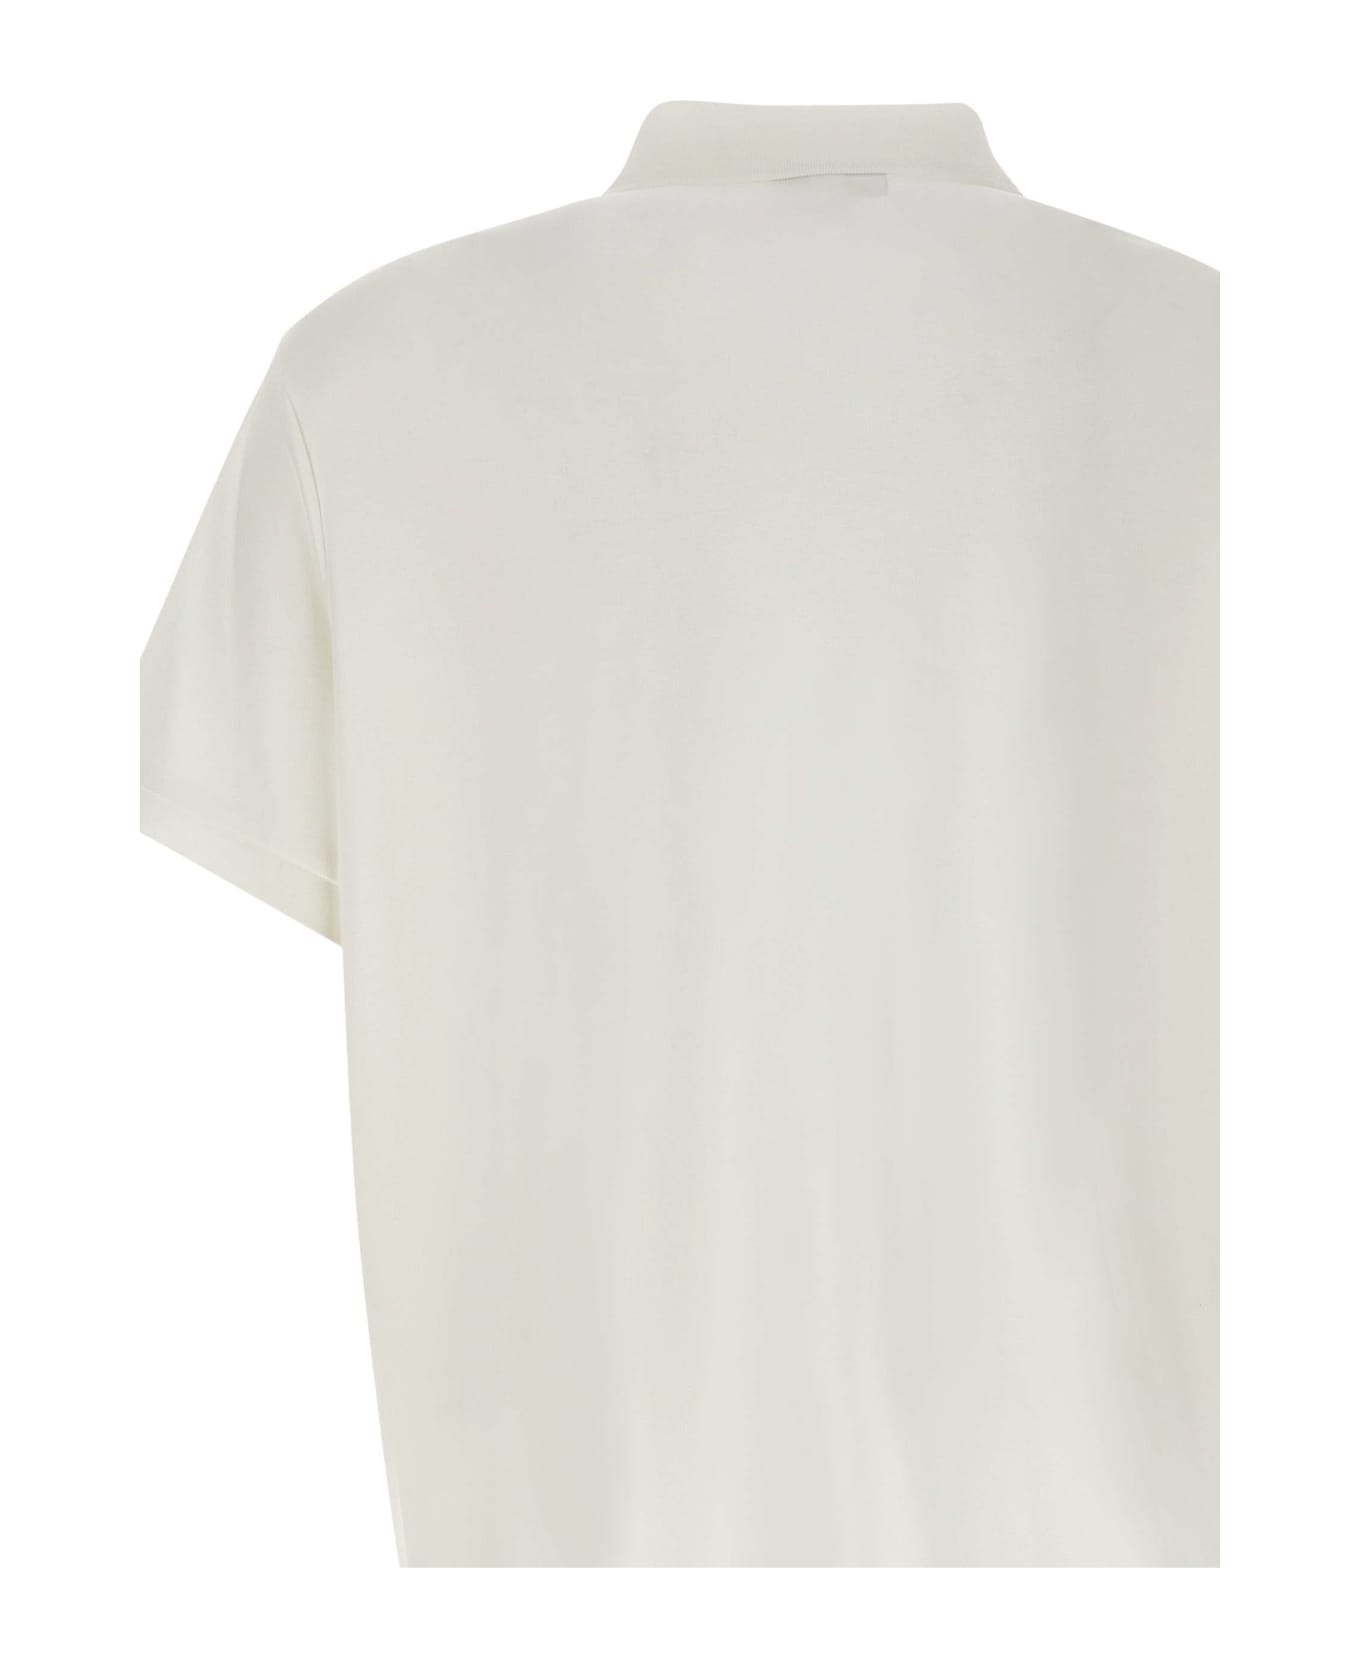 Lacoste Cotton Polo Shirt - White